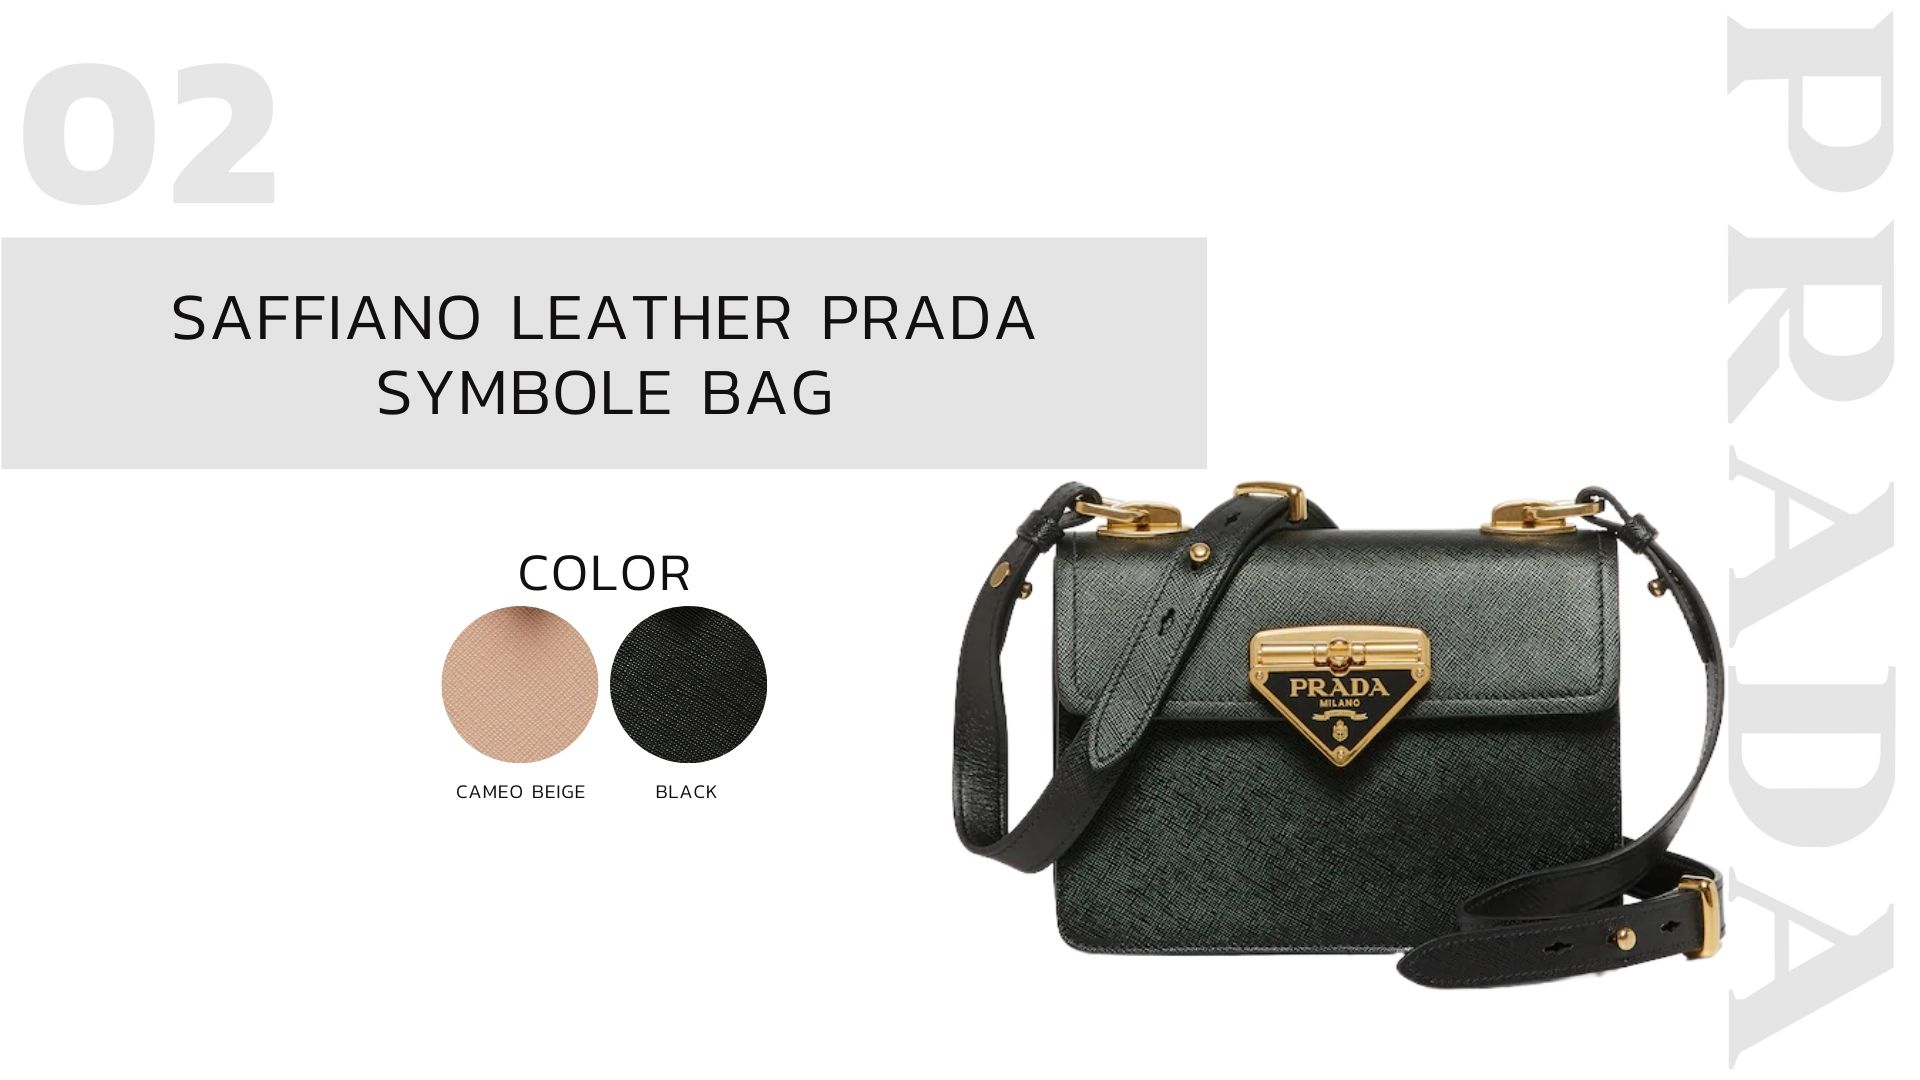 Saffiano leather Prada Symbole bag